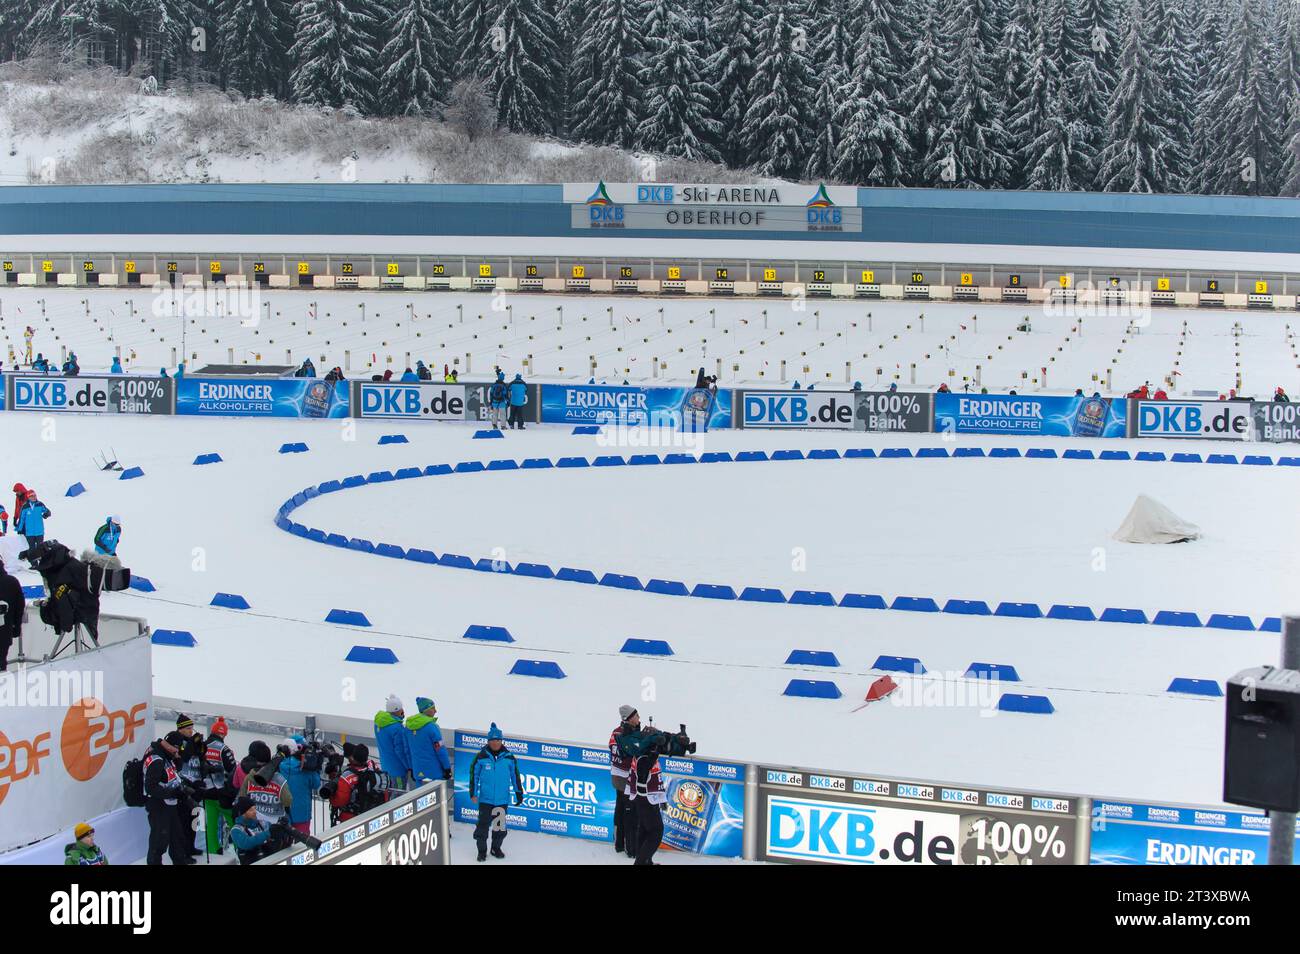 DKB Arena Oberhof Biathlon Welt Cup 4 x 6 KM Staffel der Frauen in Oberhof, Deutschland am 07.01.2015 Stock Photo